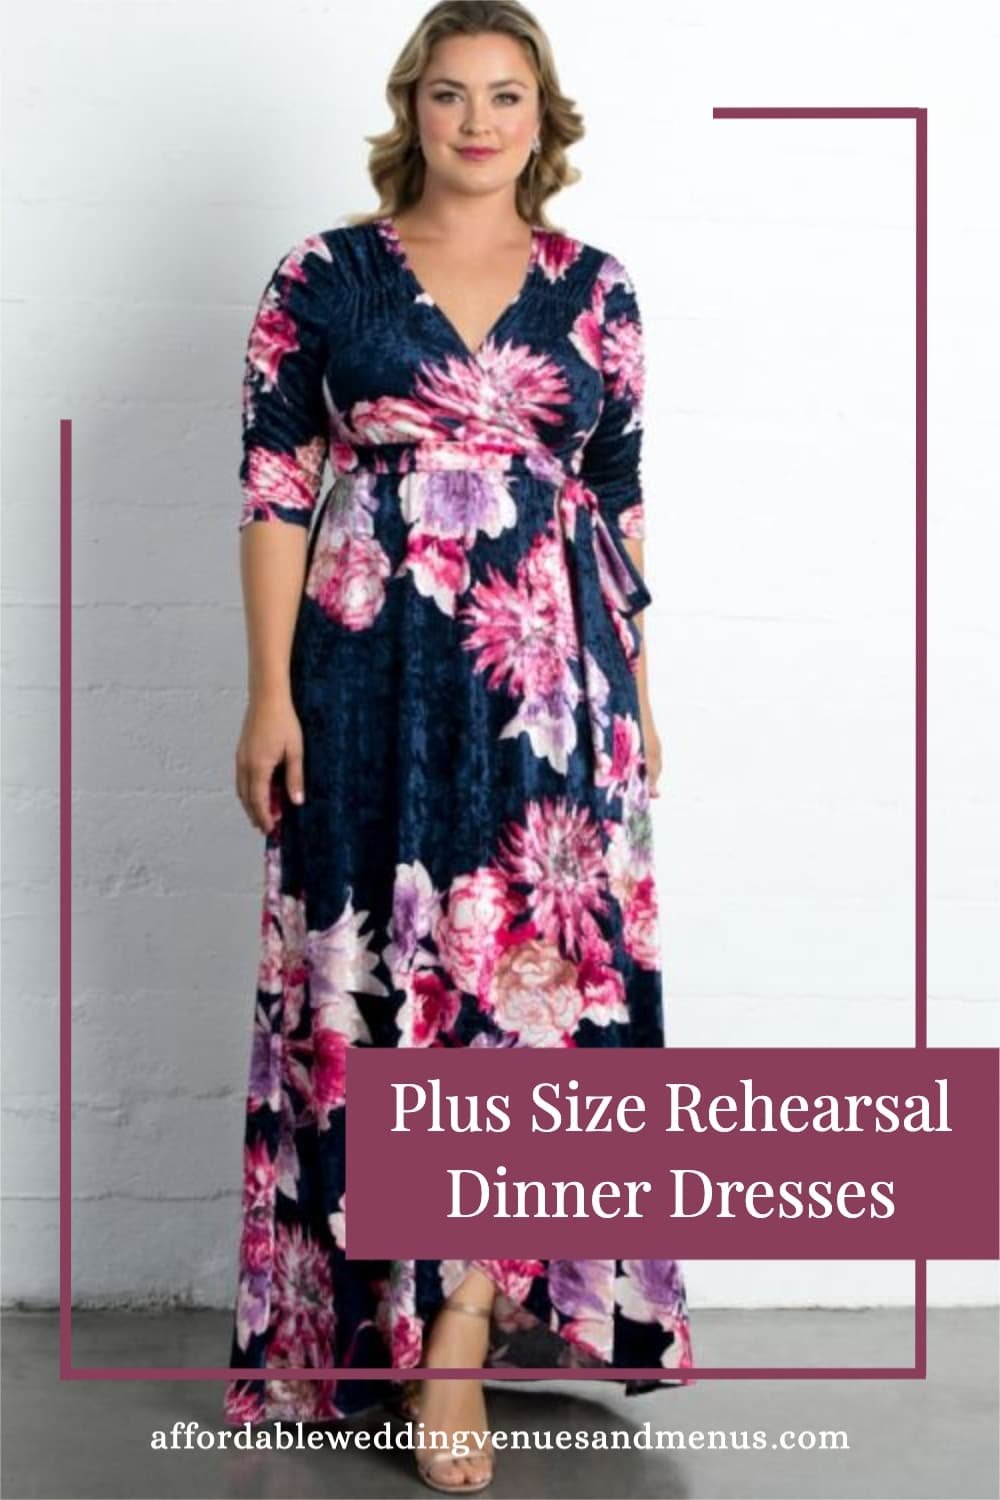 Plus Size Rehearsal Dinner Dresses — Affordable Wedding Venues & Menus